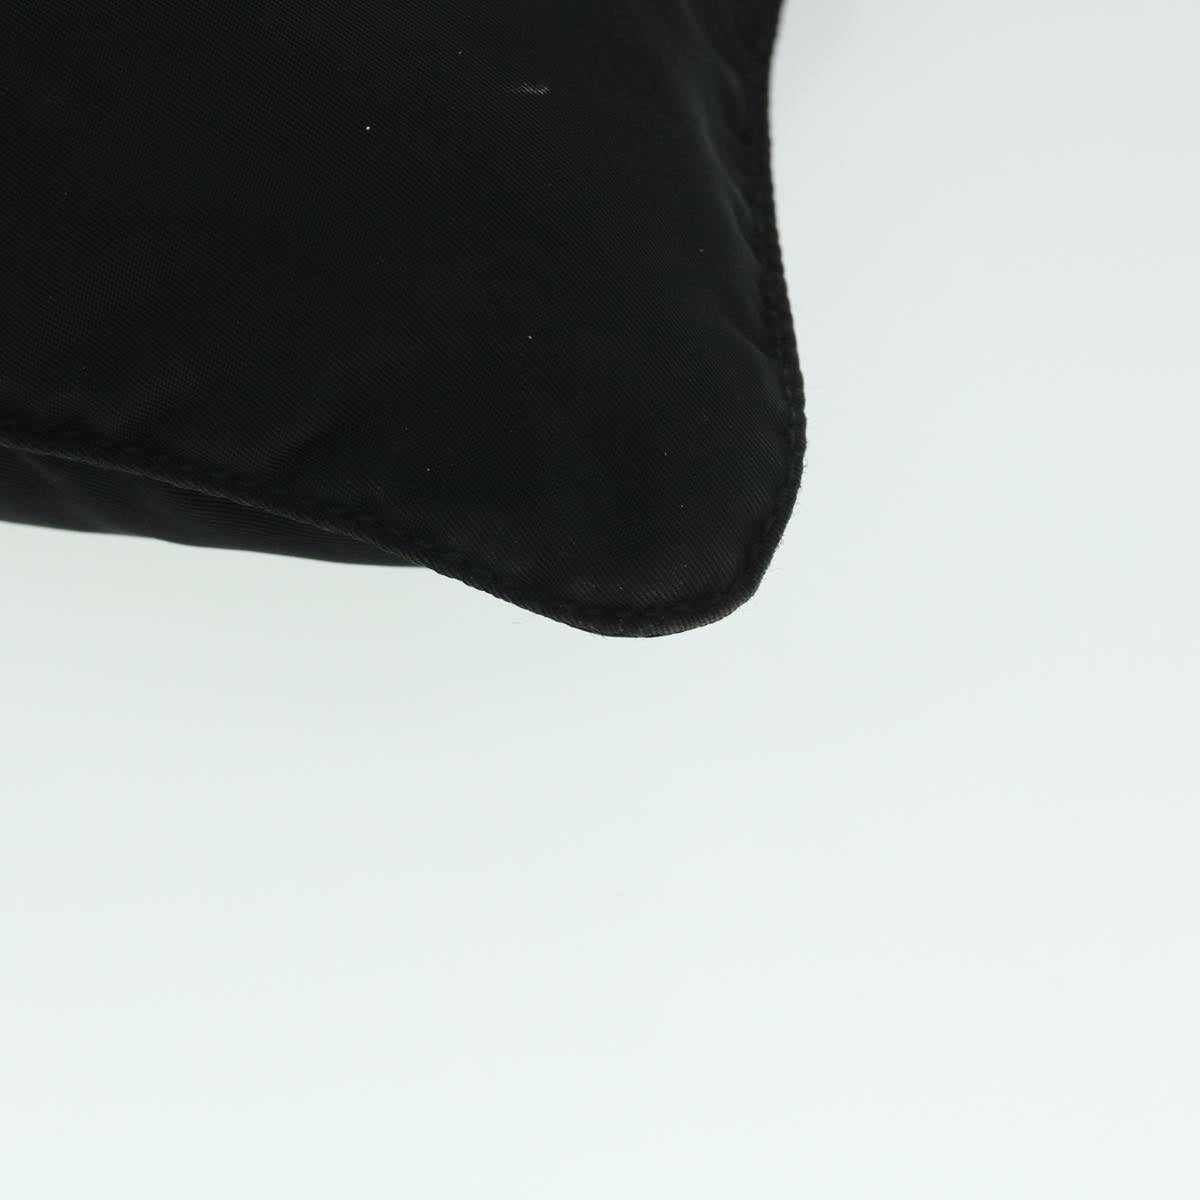 PRADA Shoulder Bag Nylon Black Auth ep1525